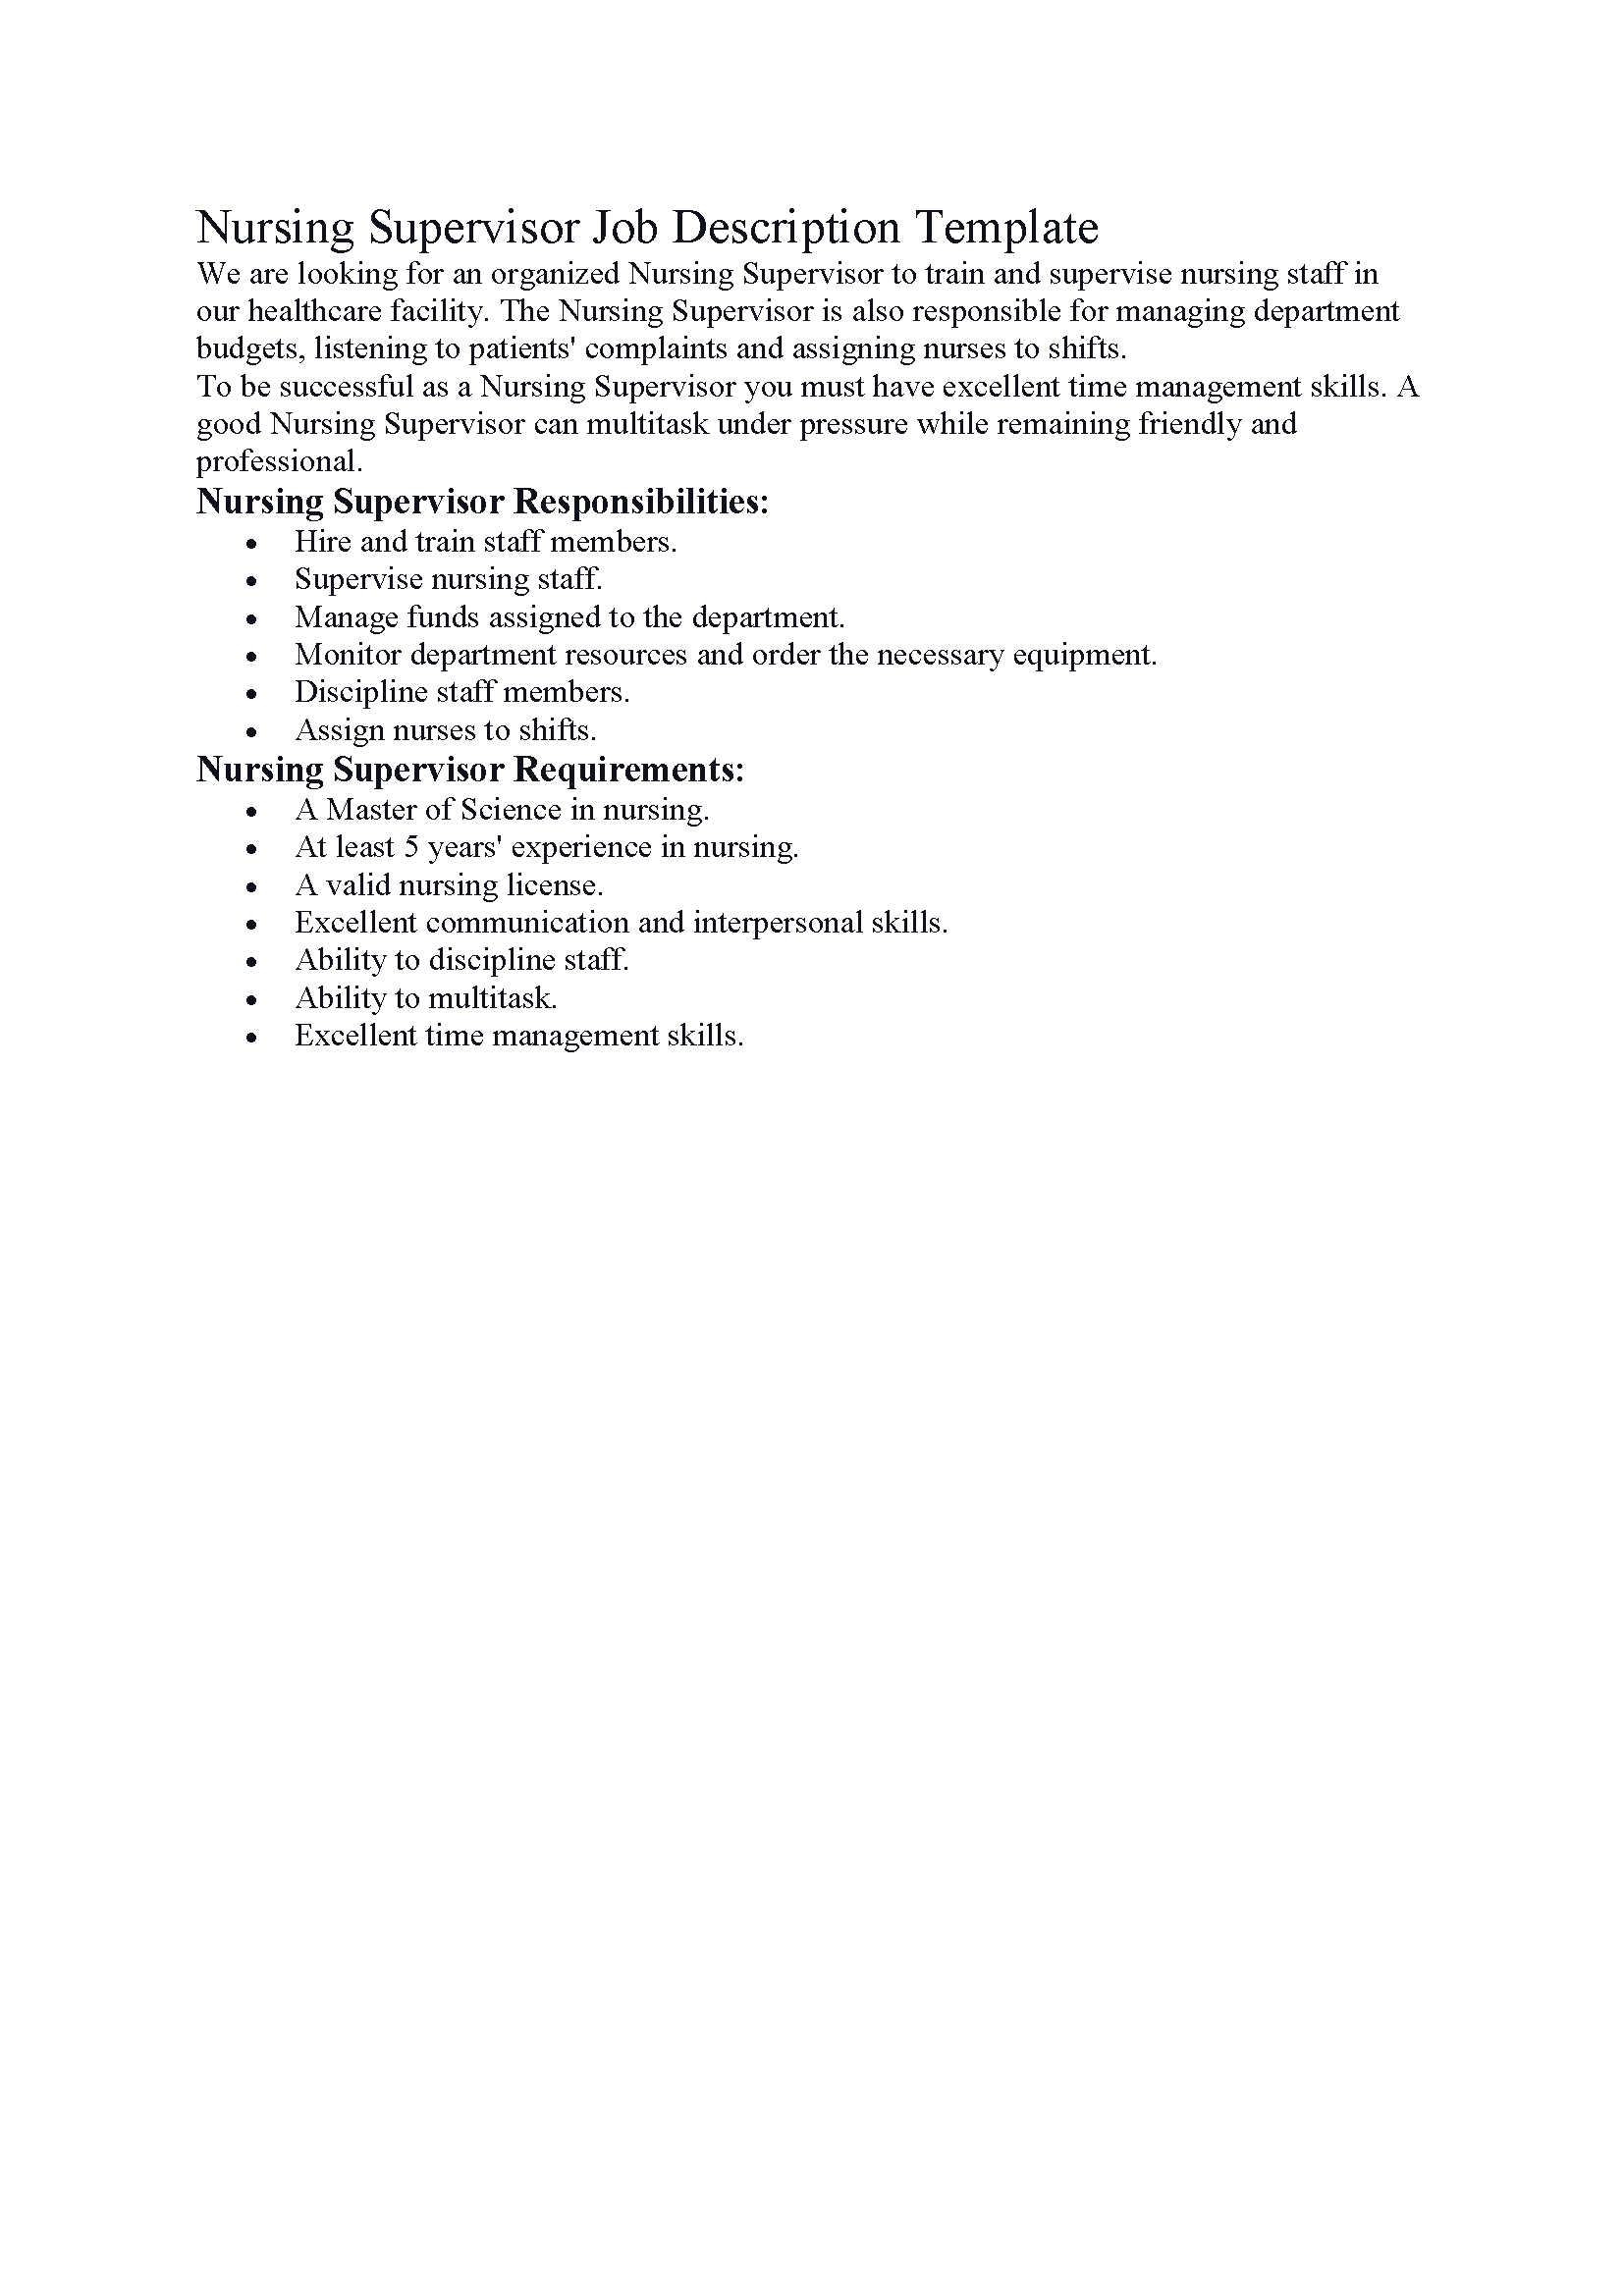 Nursing Supervisor Job Description Template